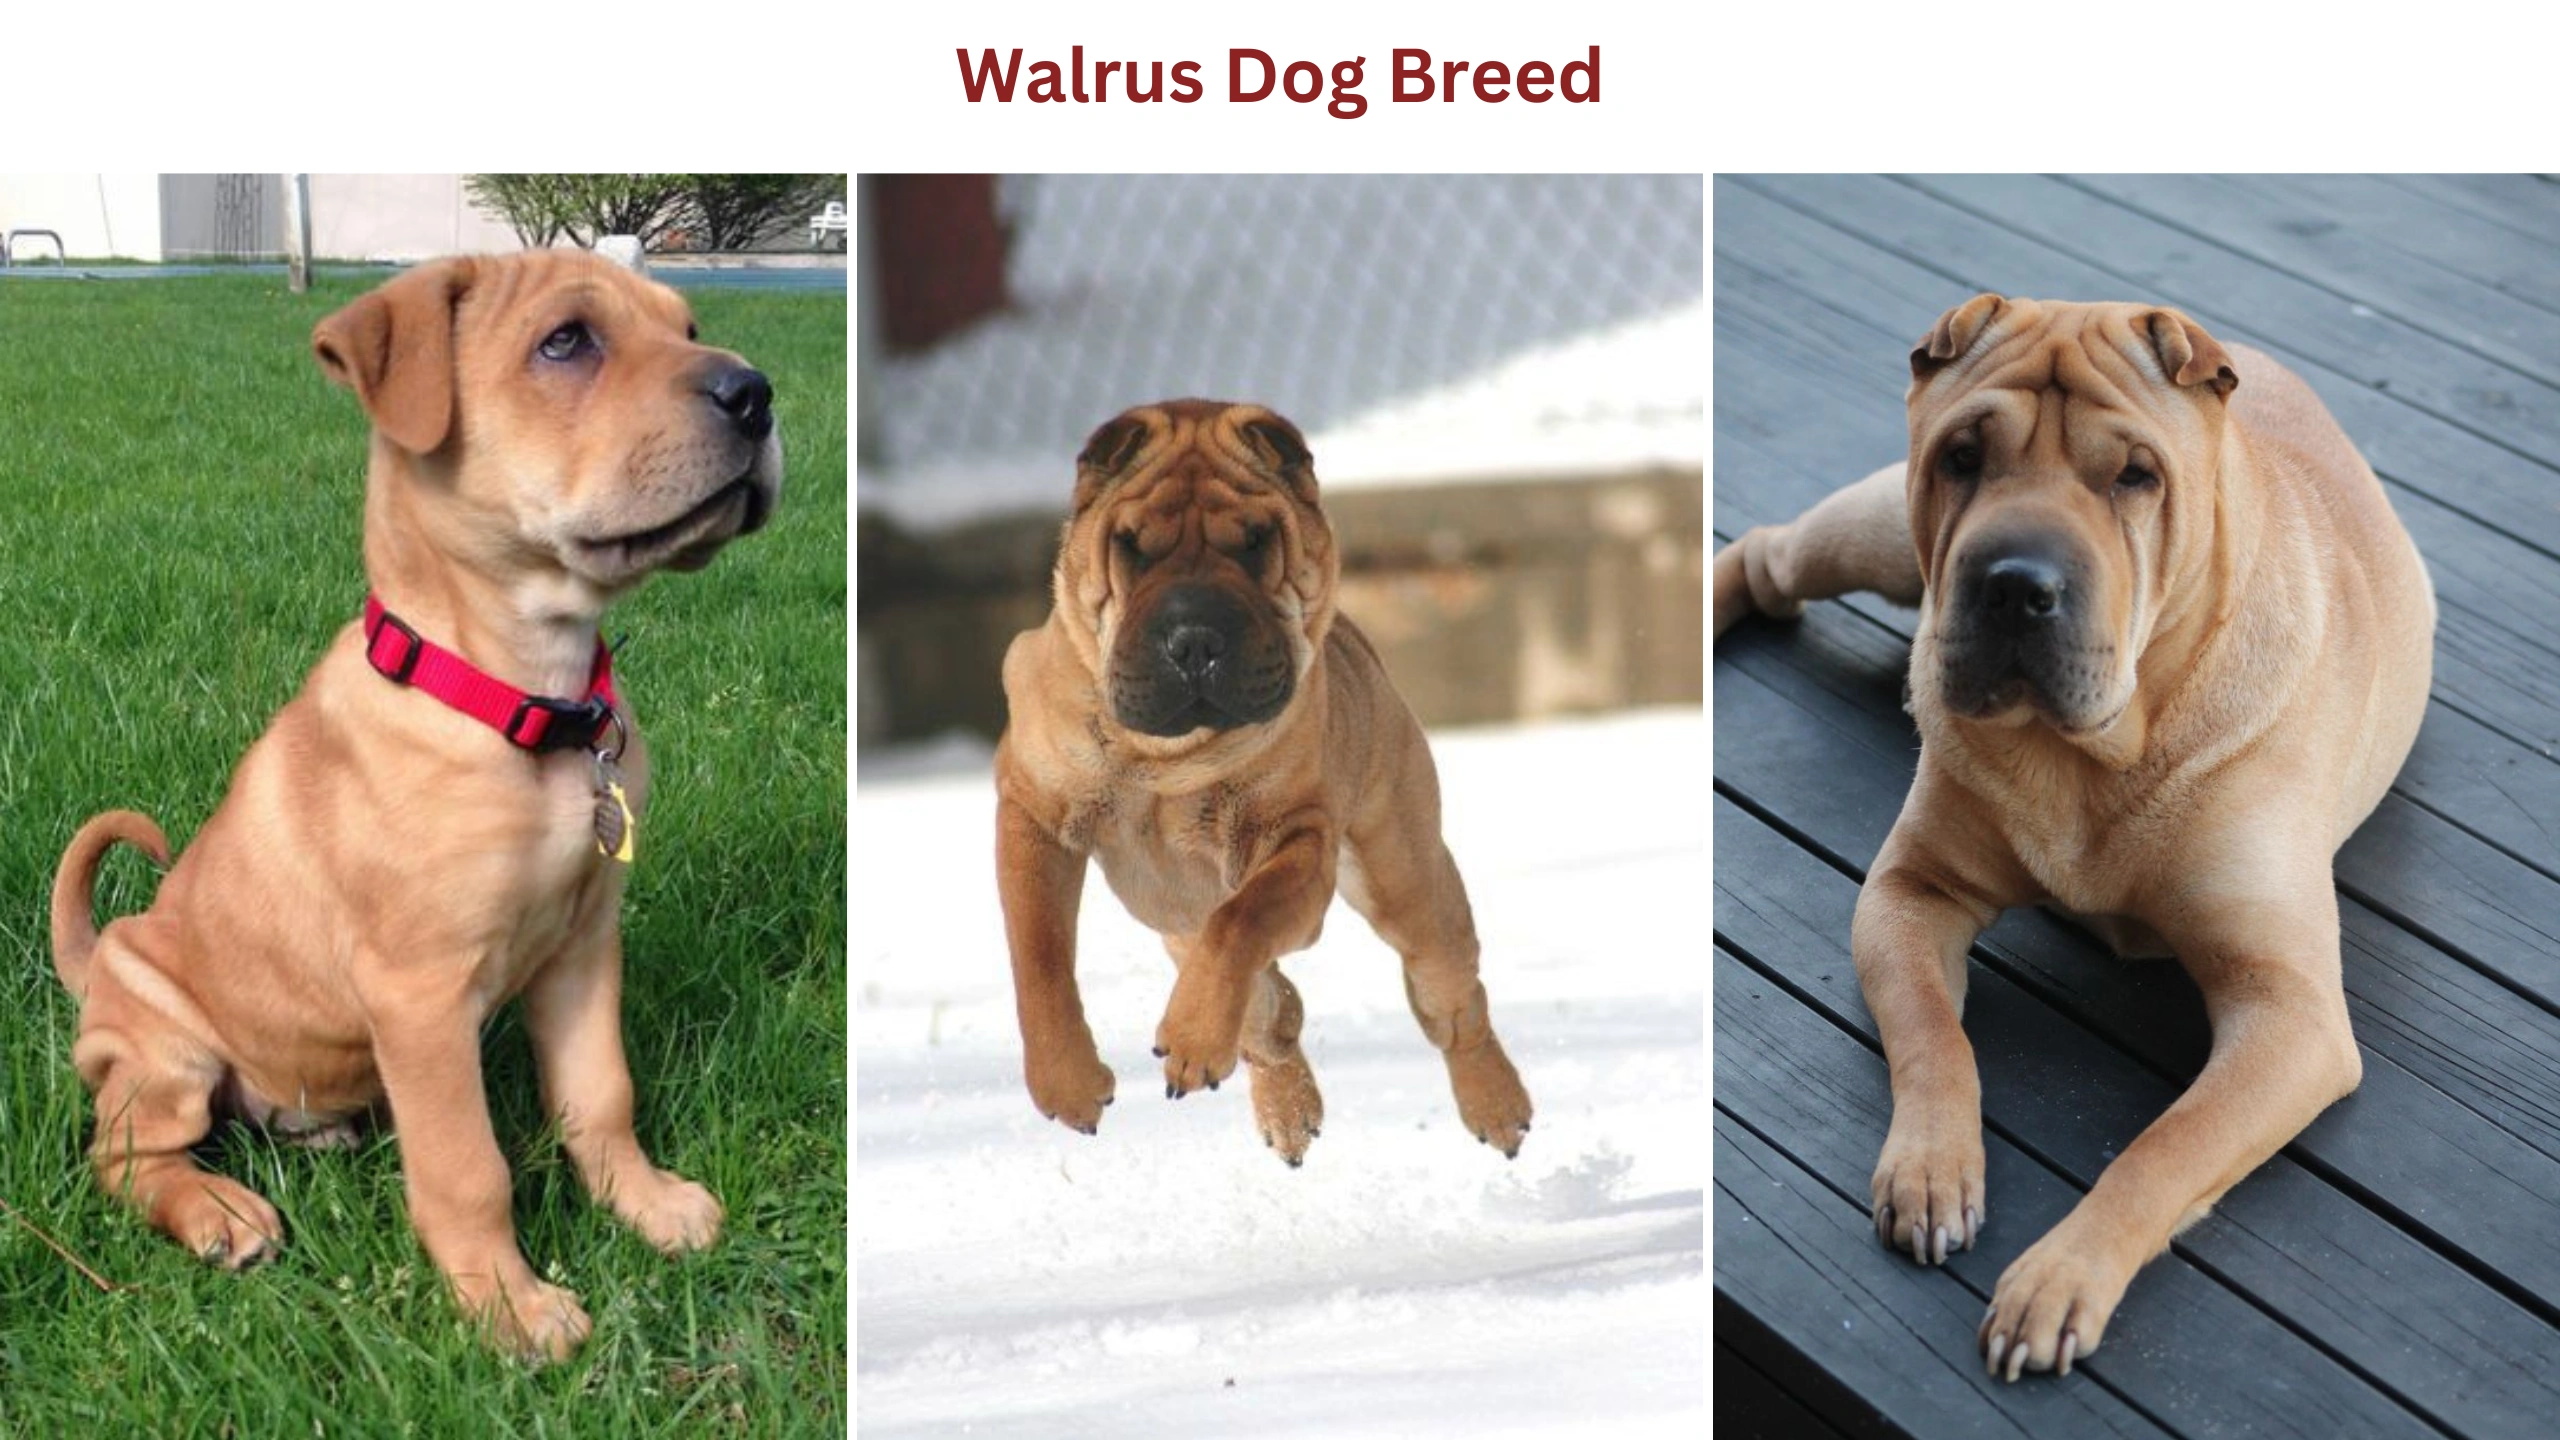 Walrus Dog Breed